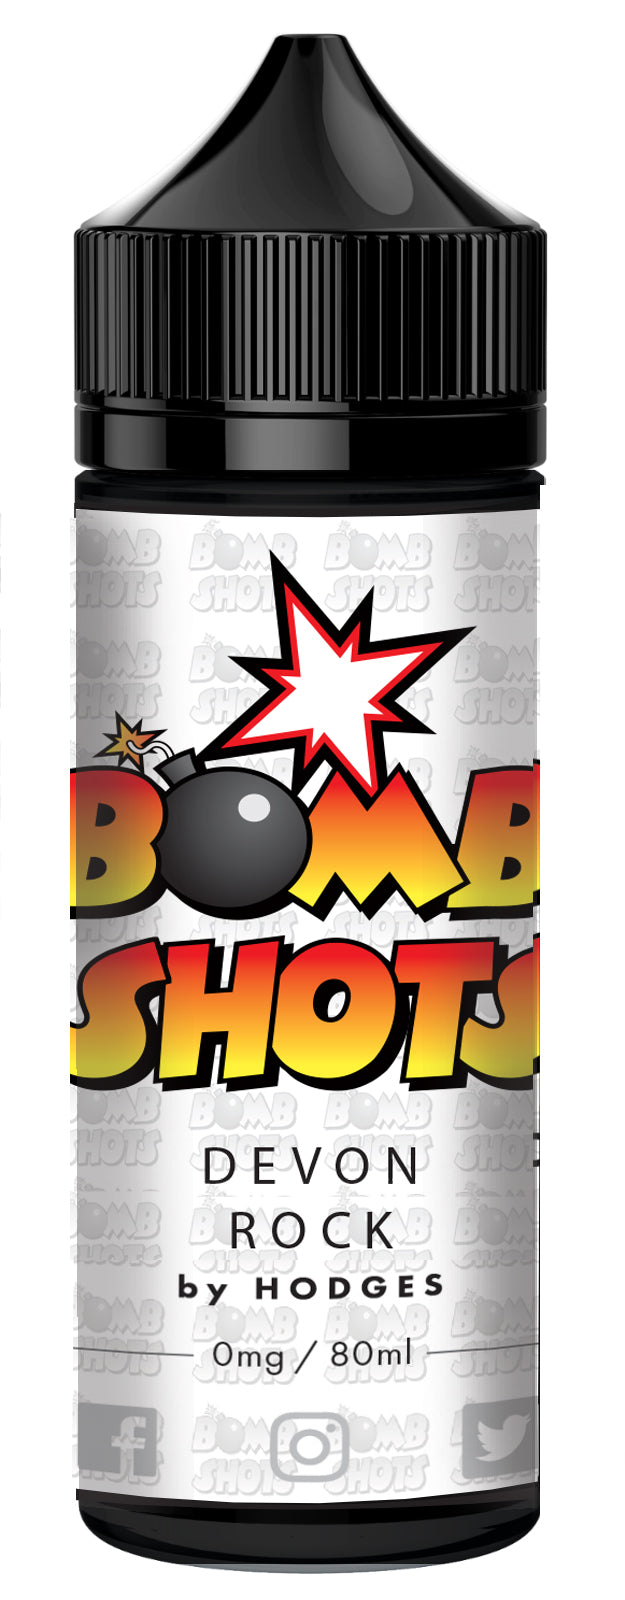 devon rock bomb shots by hodges short fill e-liquid (80ml)120ml